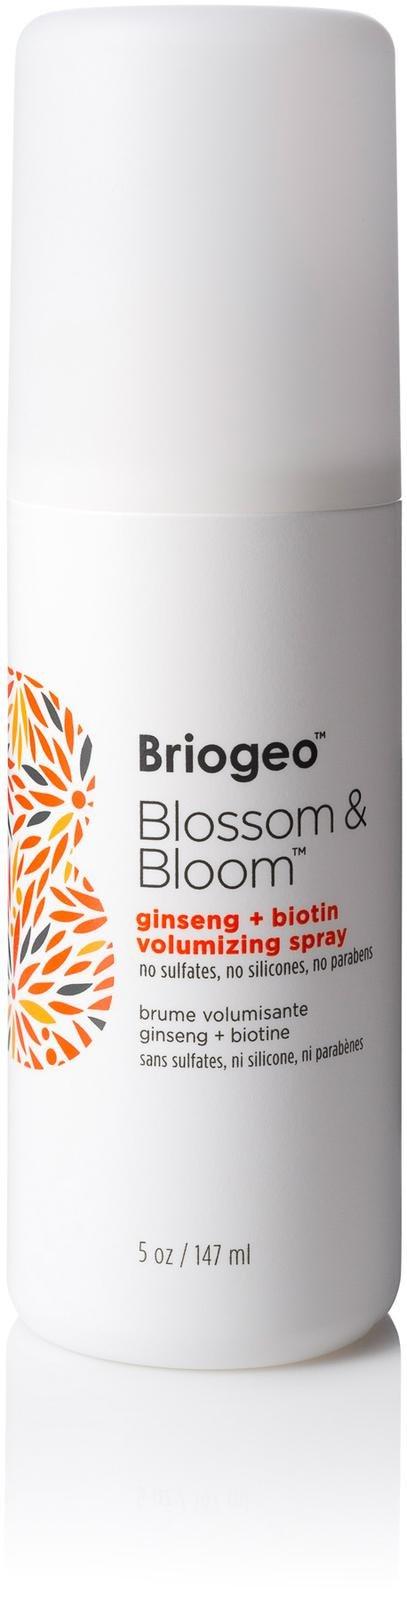 Briogeo Blossom & Bloom Ginseng + Biotin Volumizing Blow Dry Spray - 5 Oz